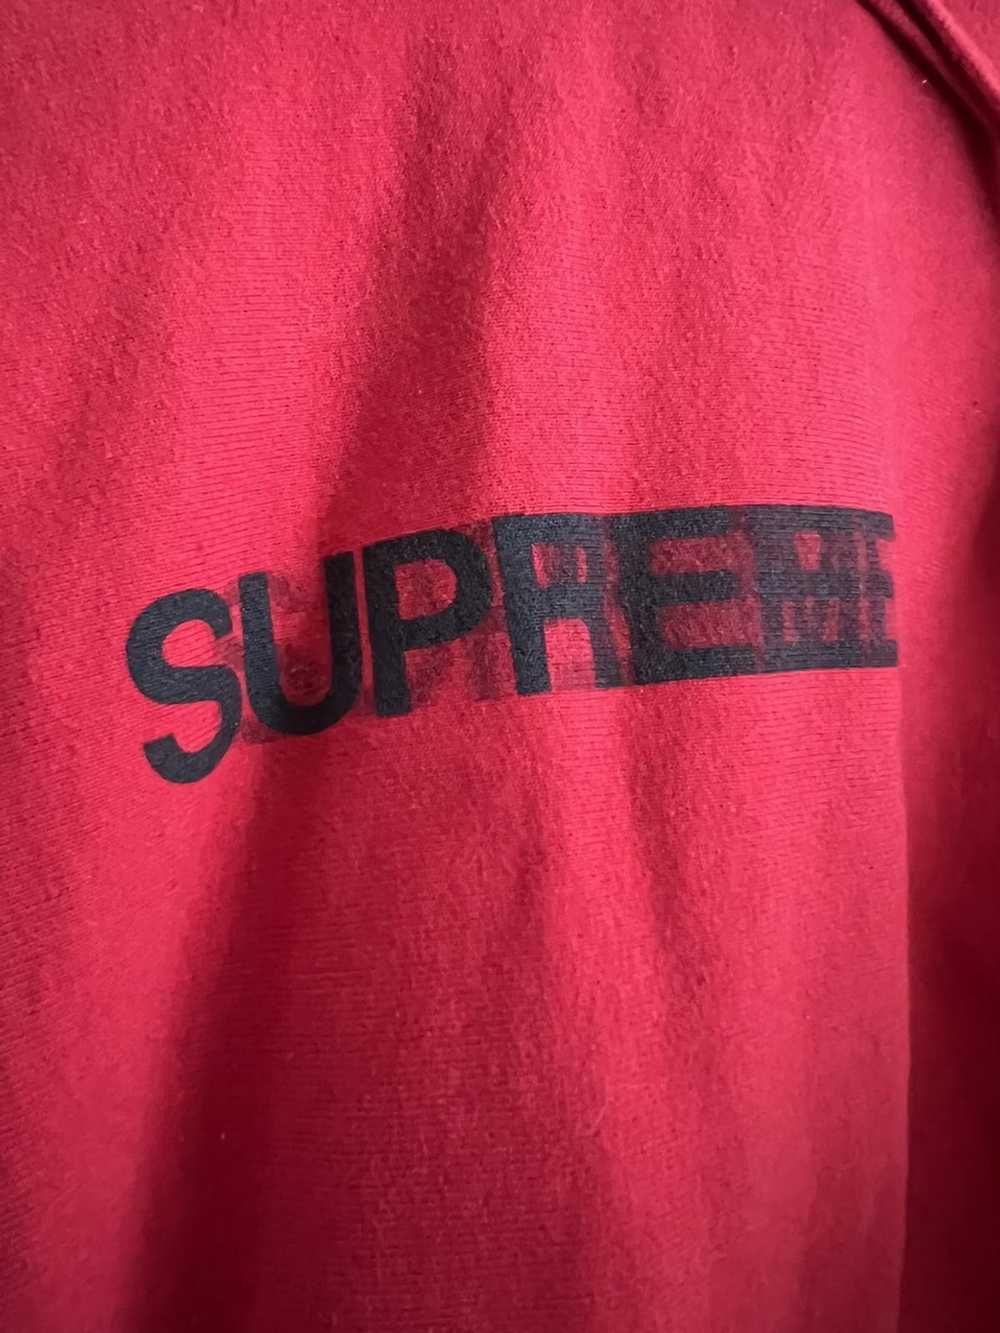 Supreme Supreme “Motion Logo Hoodie” S/S 16 Red XL - image 3